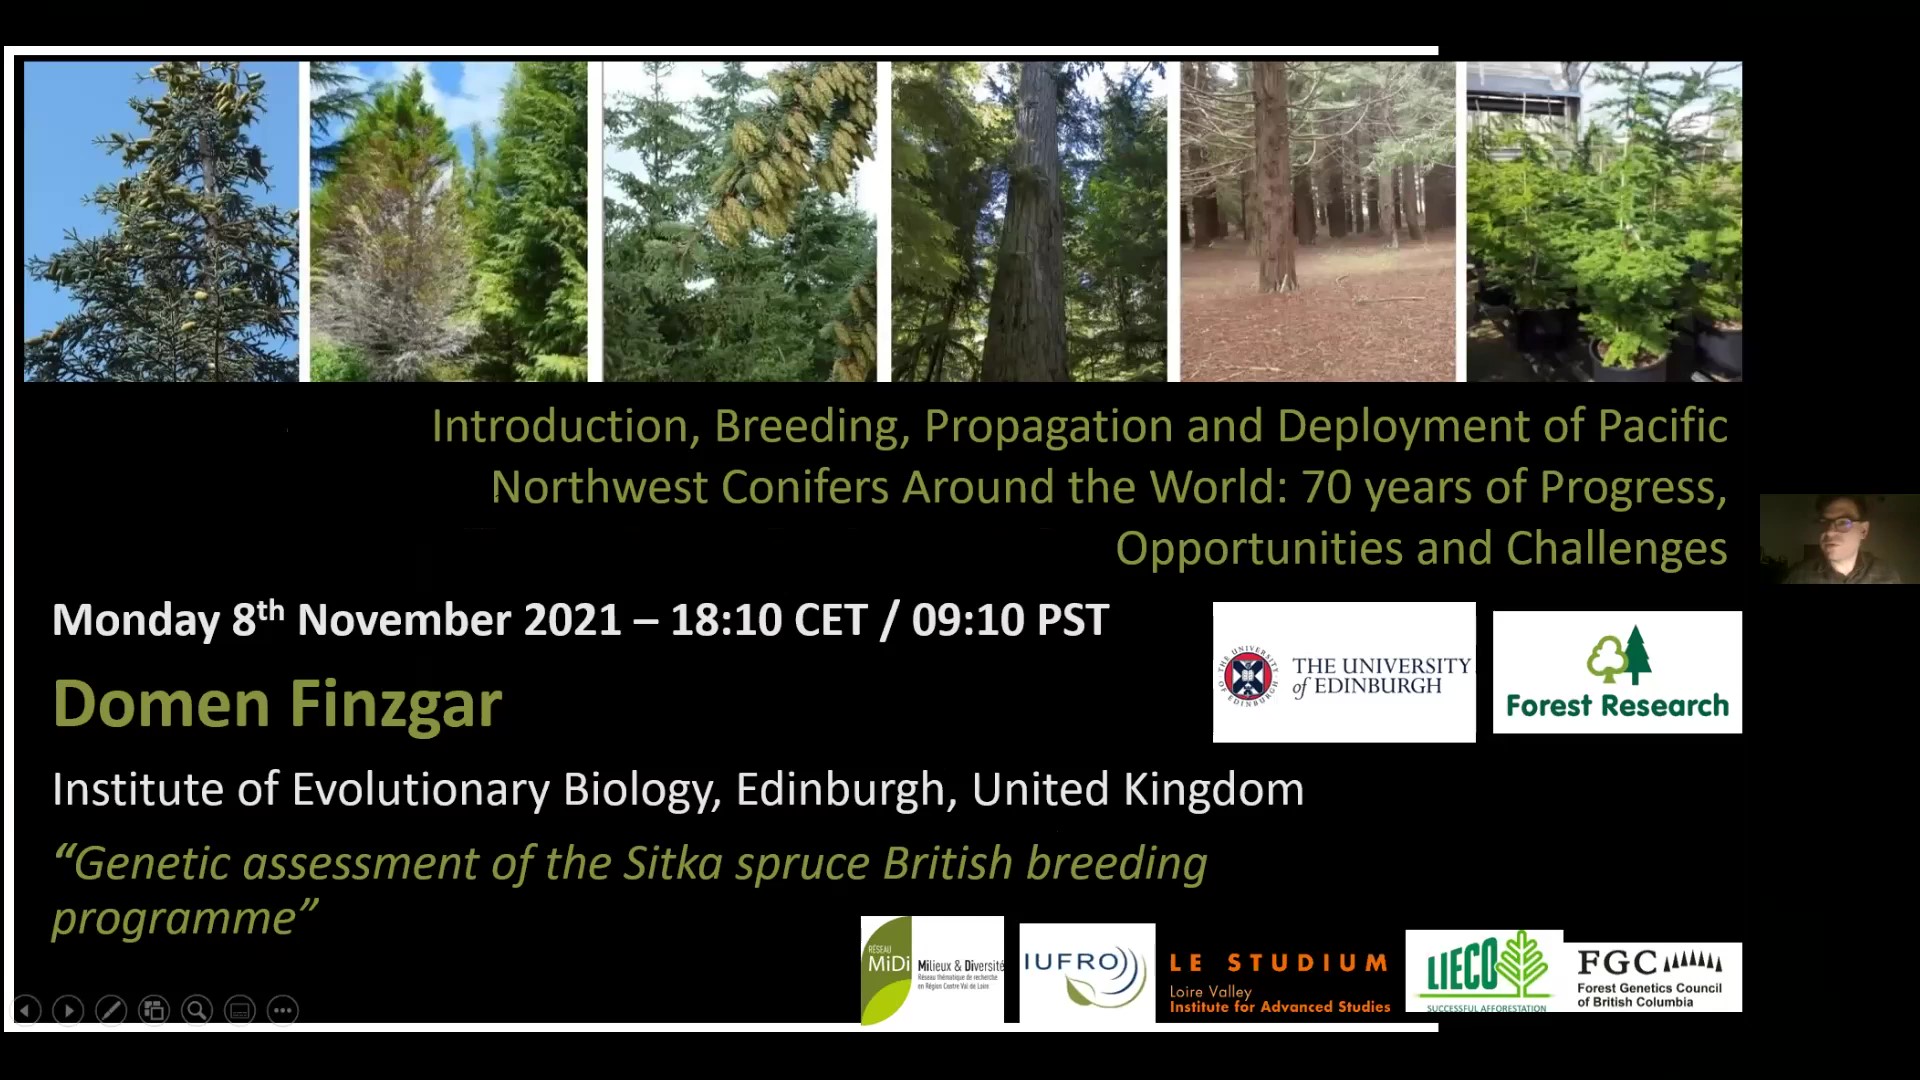 Genetic assessment of the Sitka spruce British breeding programme - Domen Finzgar